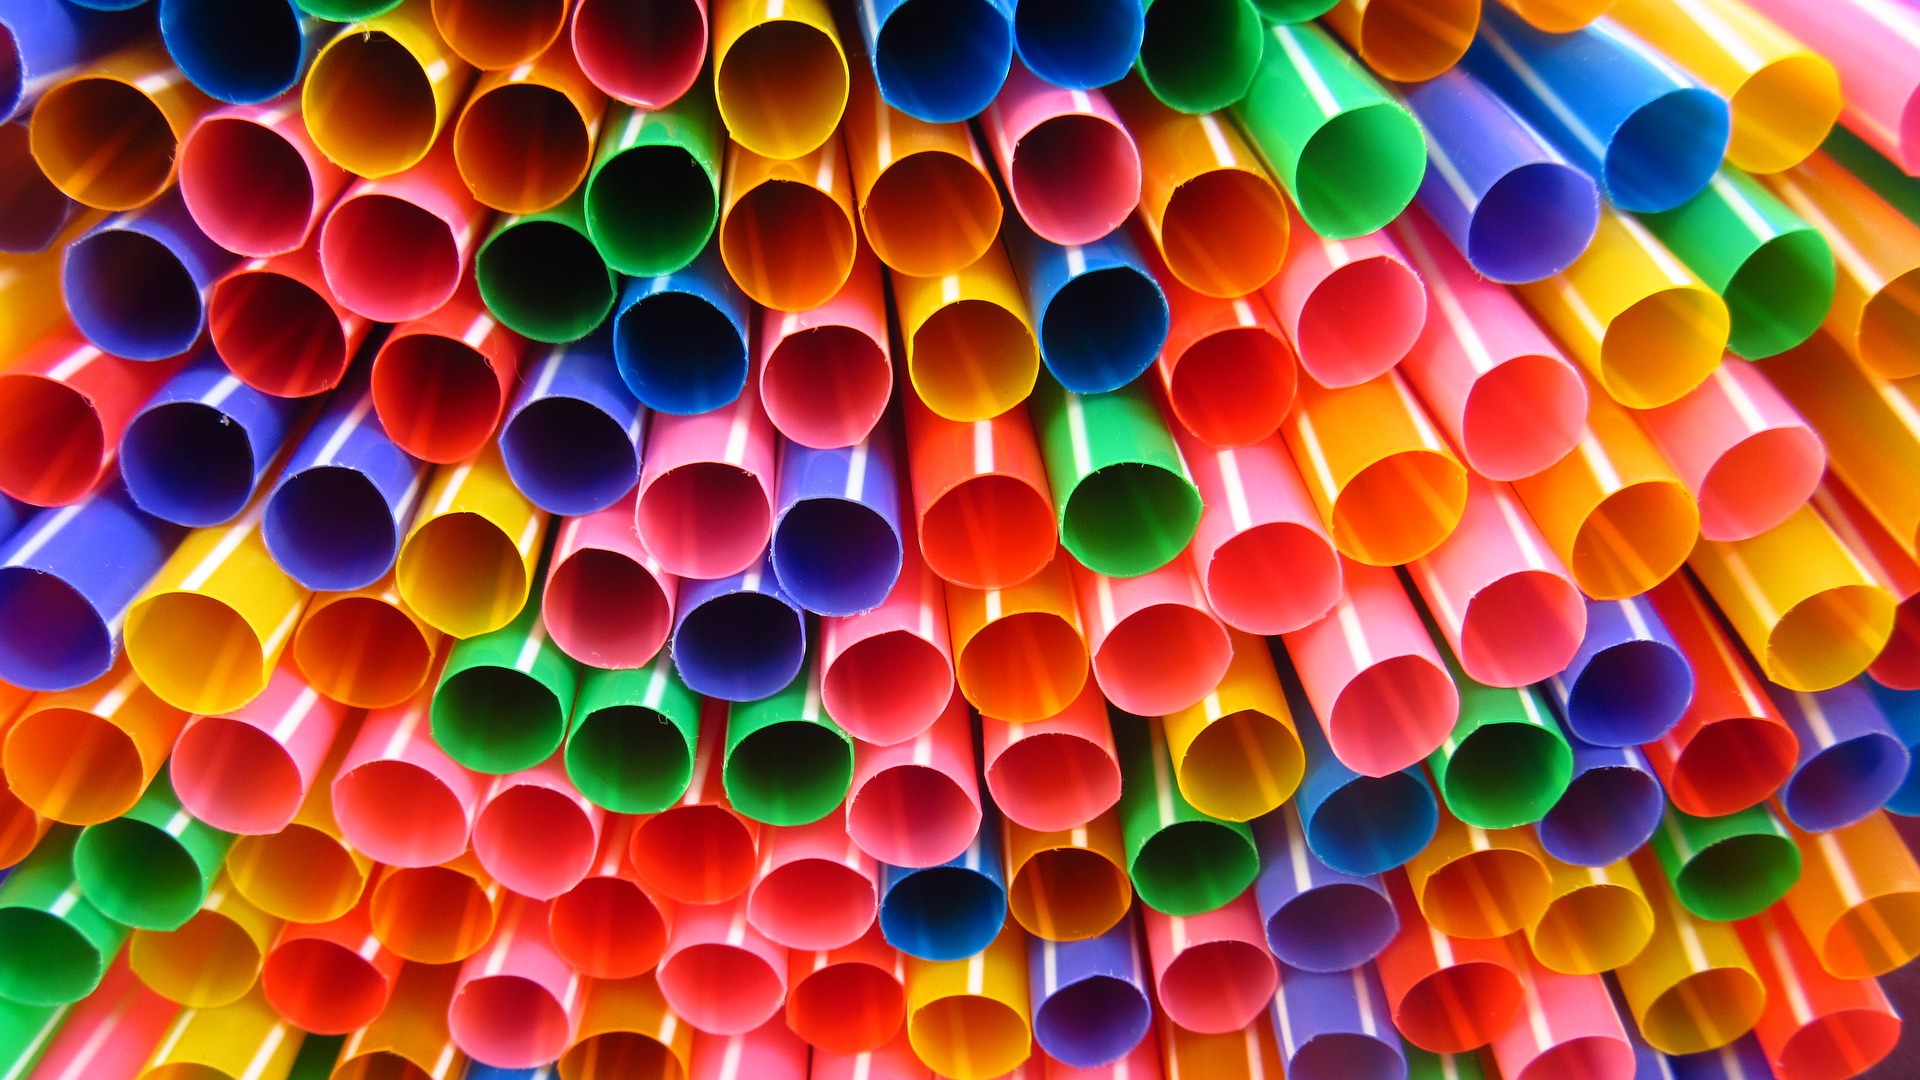 Plastics crackdown - straws